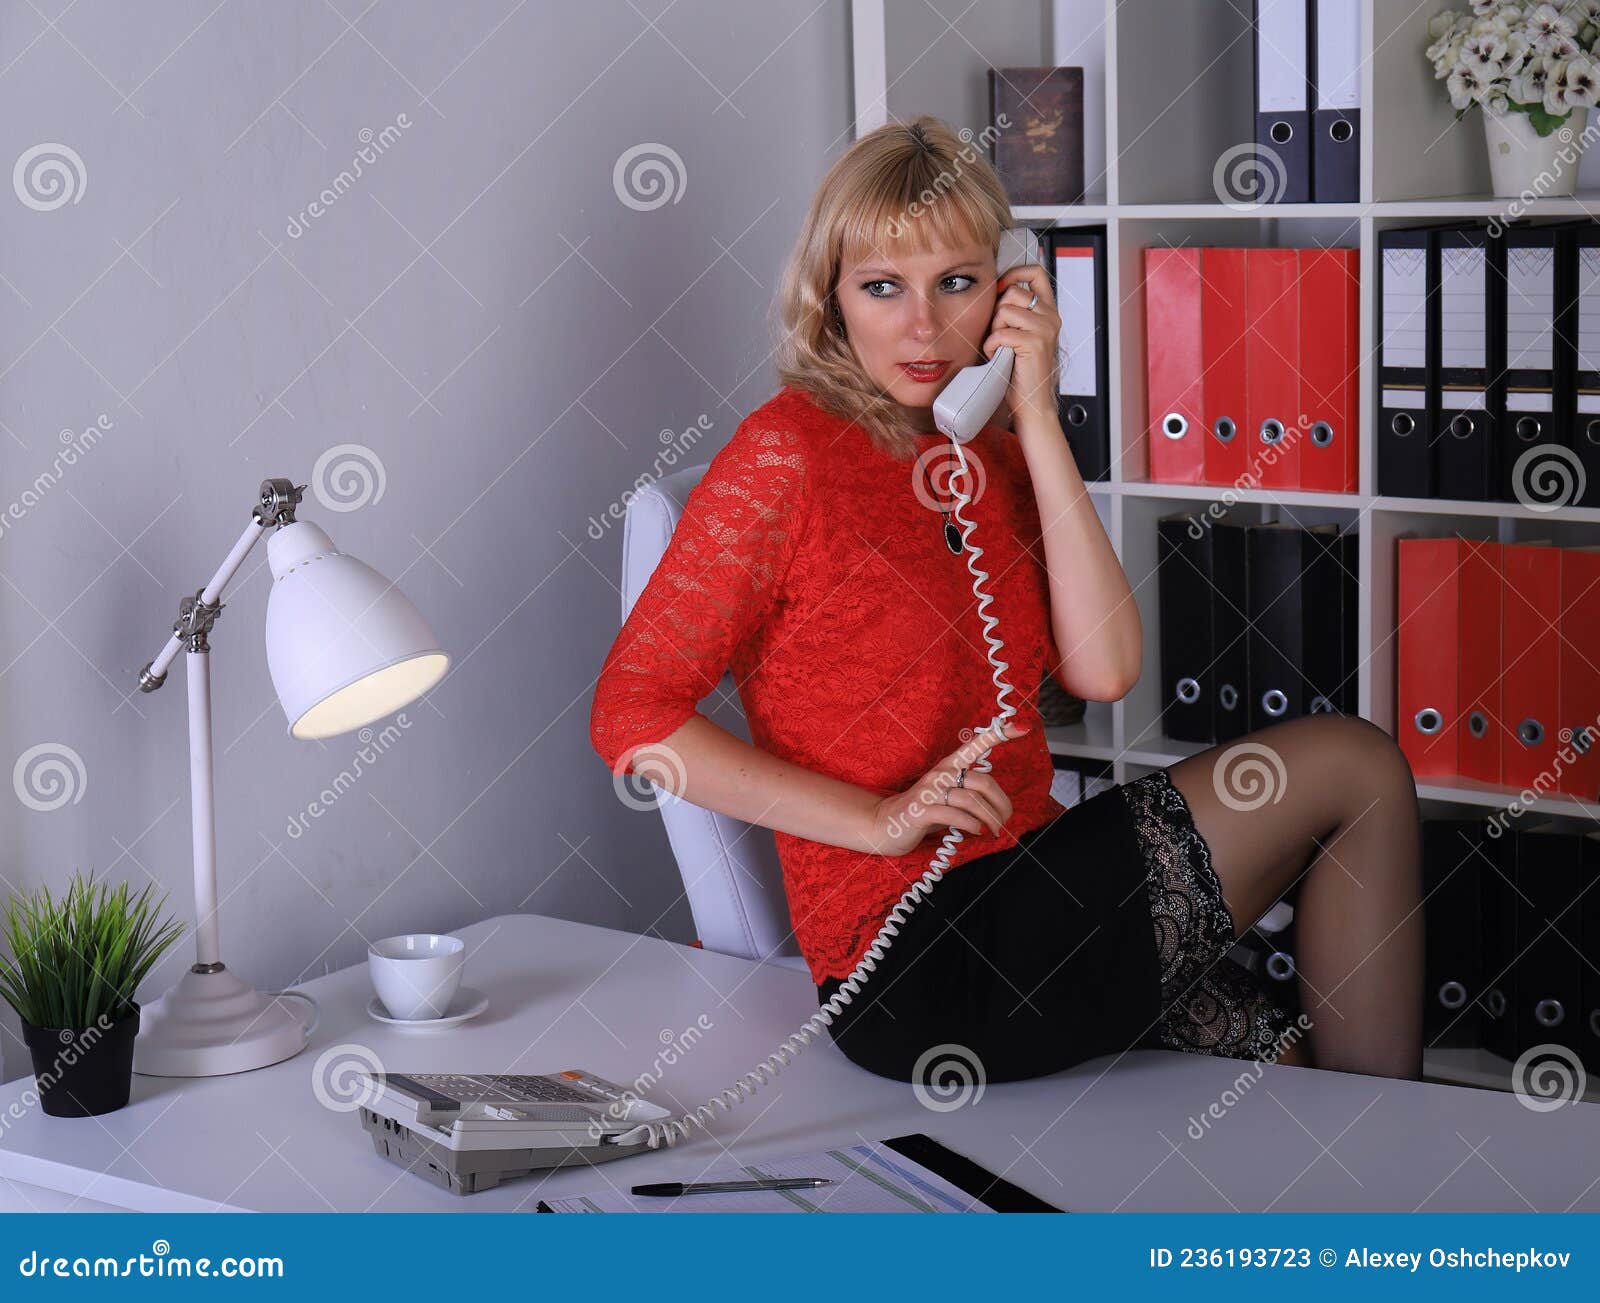 Beautiful Legged Blonde Girl In Black Stockings And Black Minidress Posing On Table Stock Image